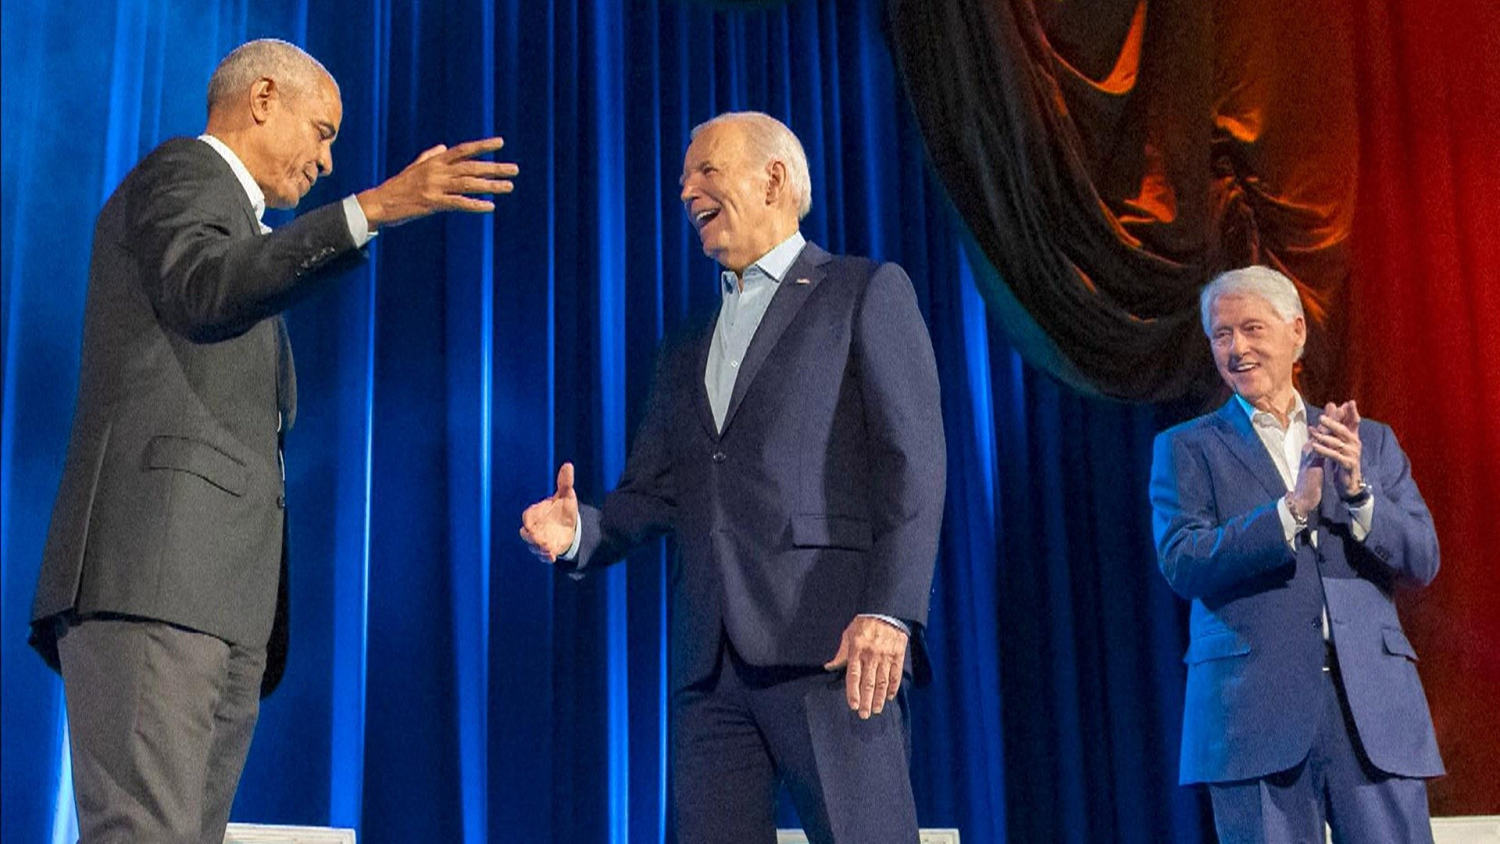 Biden raises millions during star-studded NYC fund raiser